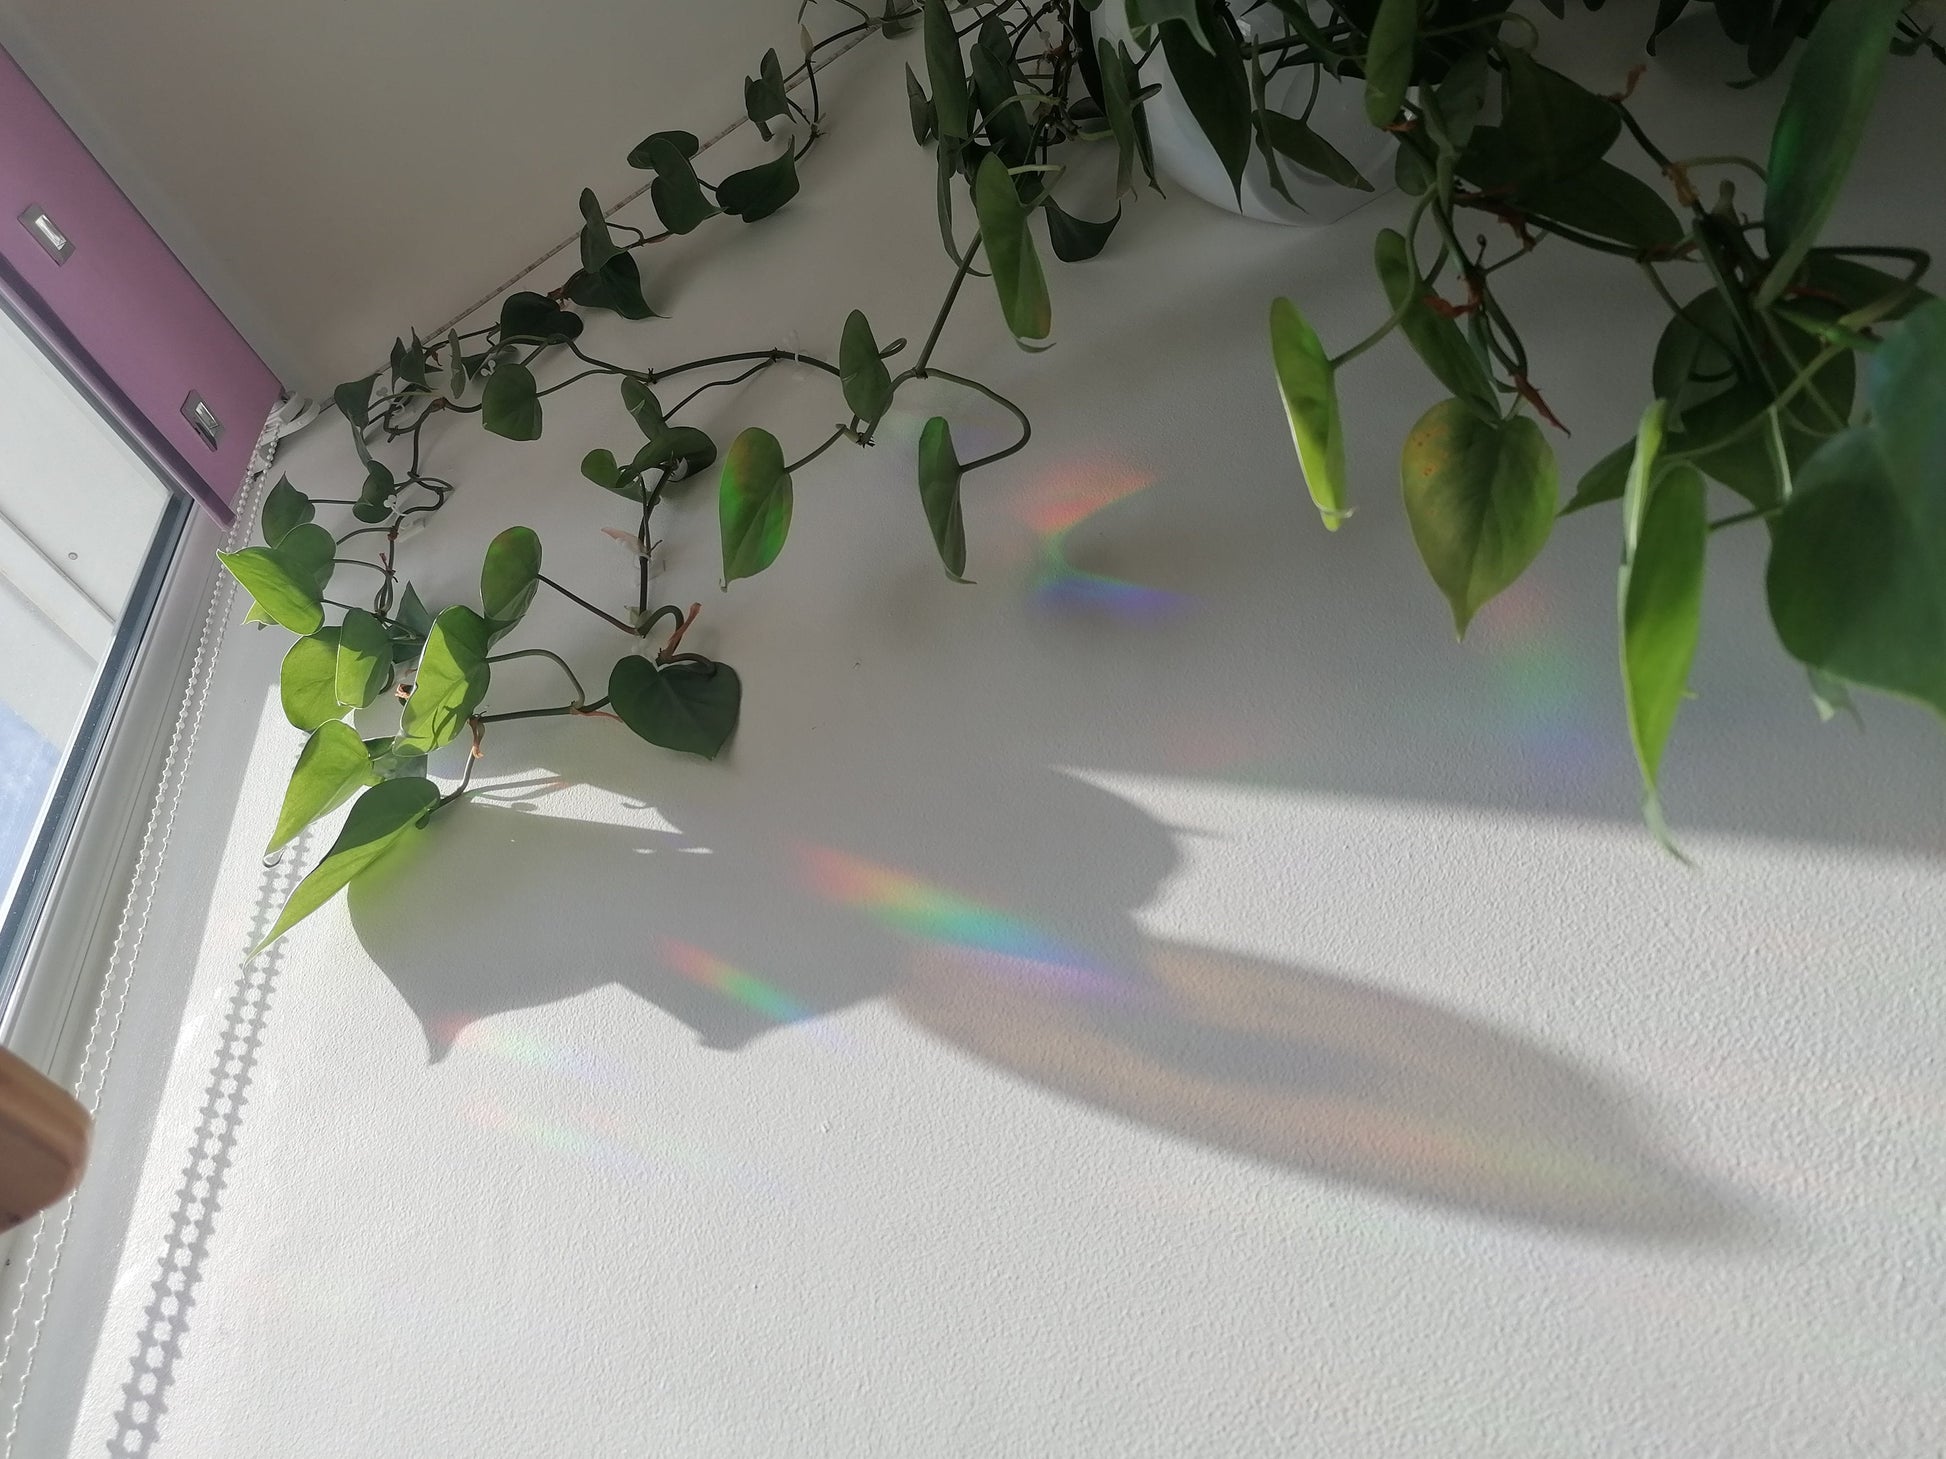 Invisible illness bean suncatcher sticker- rainbow making window decal- spoonie gift, 3.2" x 4",create beautiful rainbows across your room